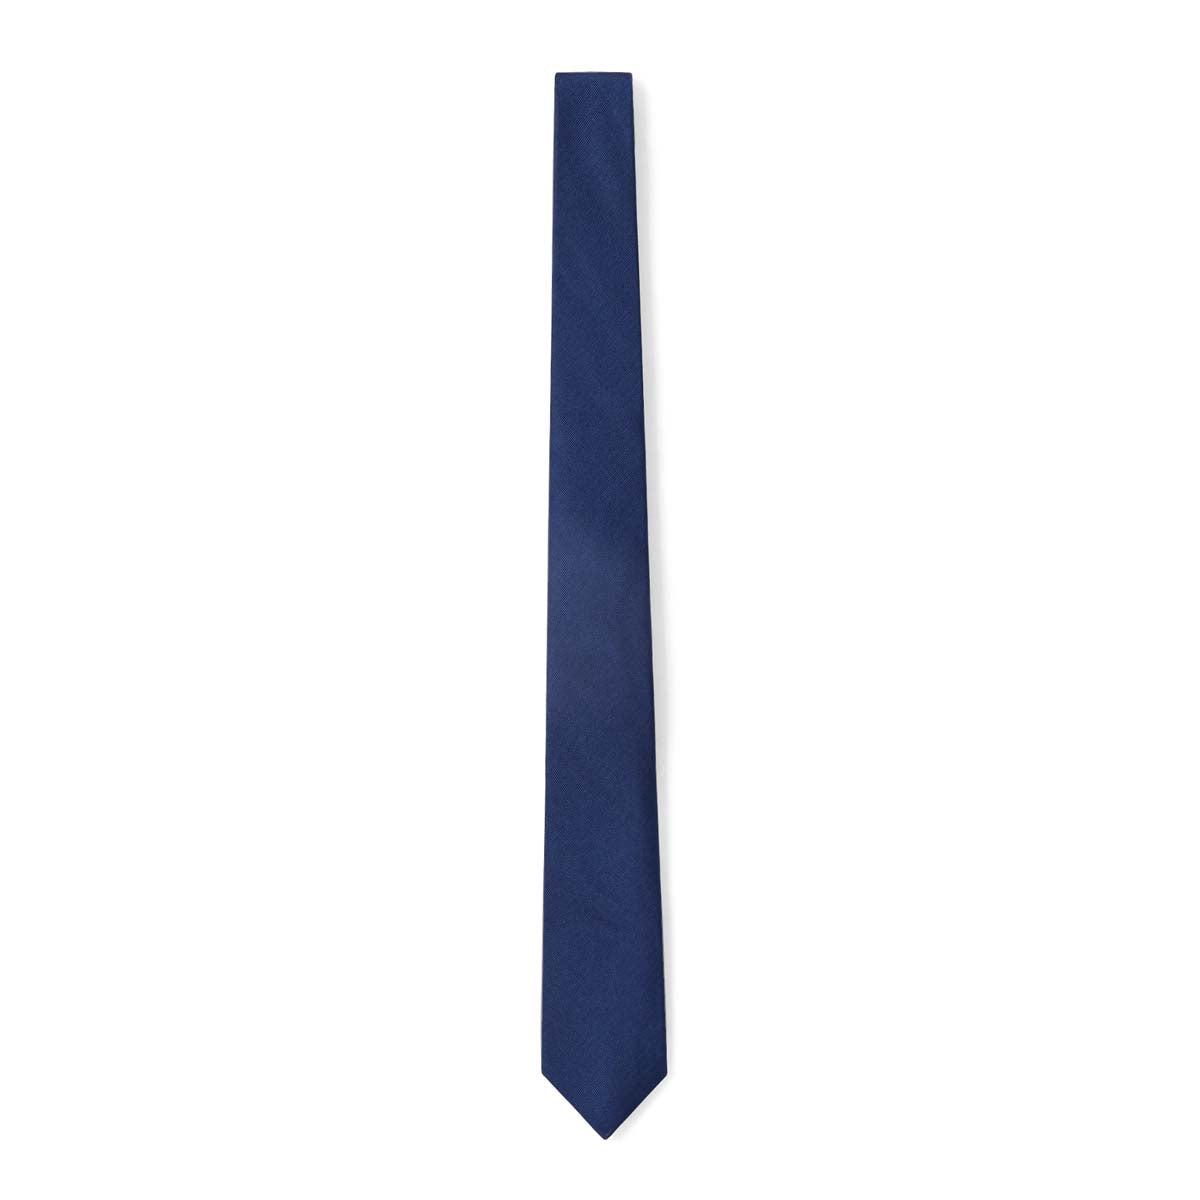 Cravate fine twill bleu marine